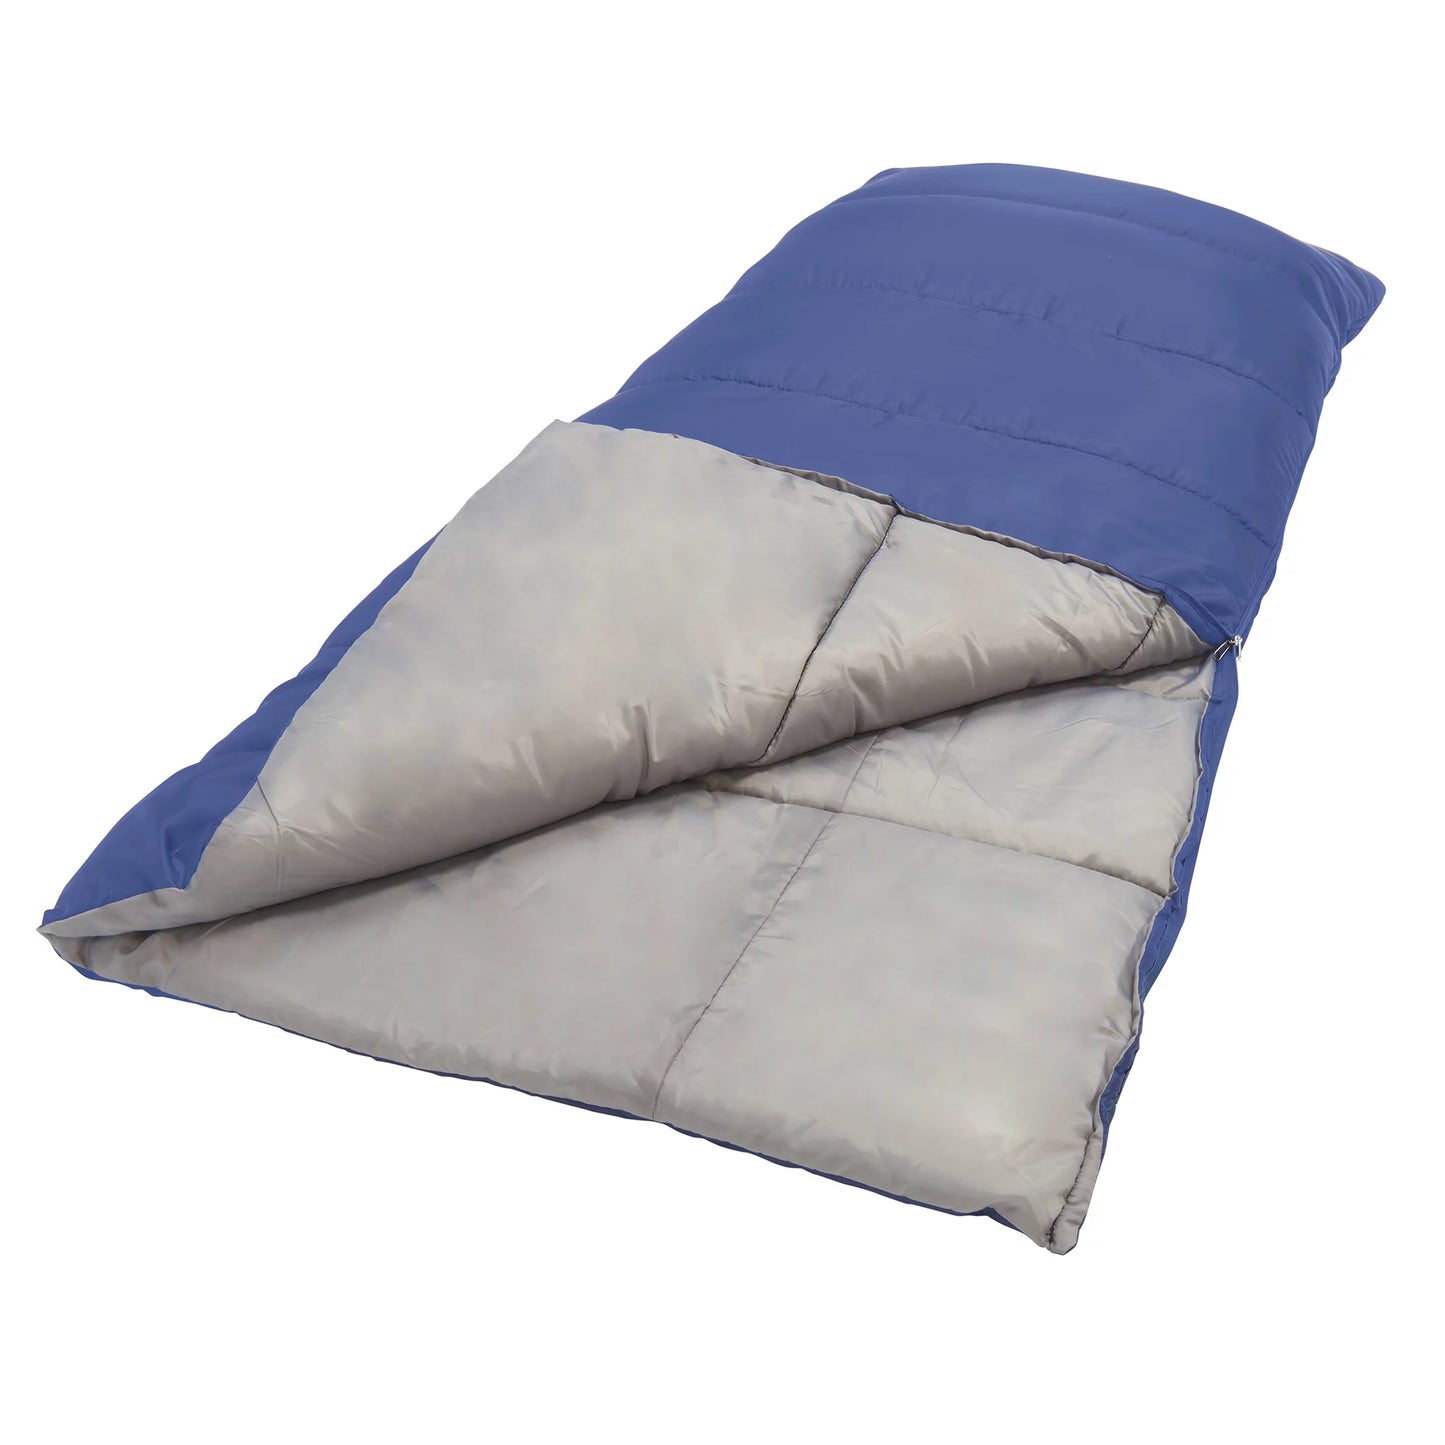 40 Degree Camping Sleeping Bag